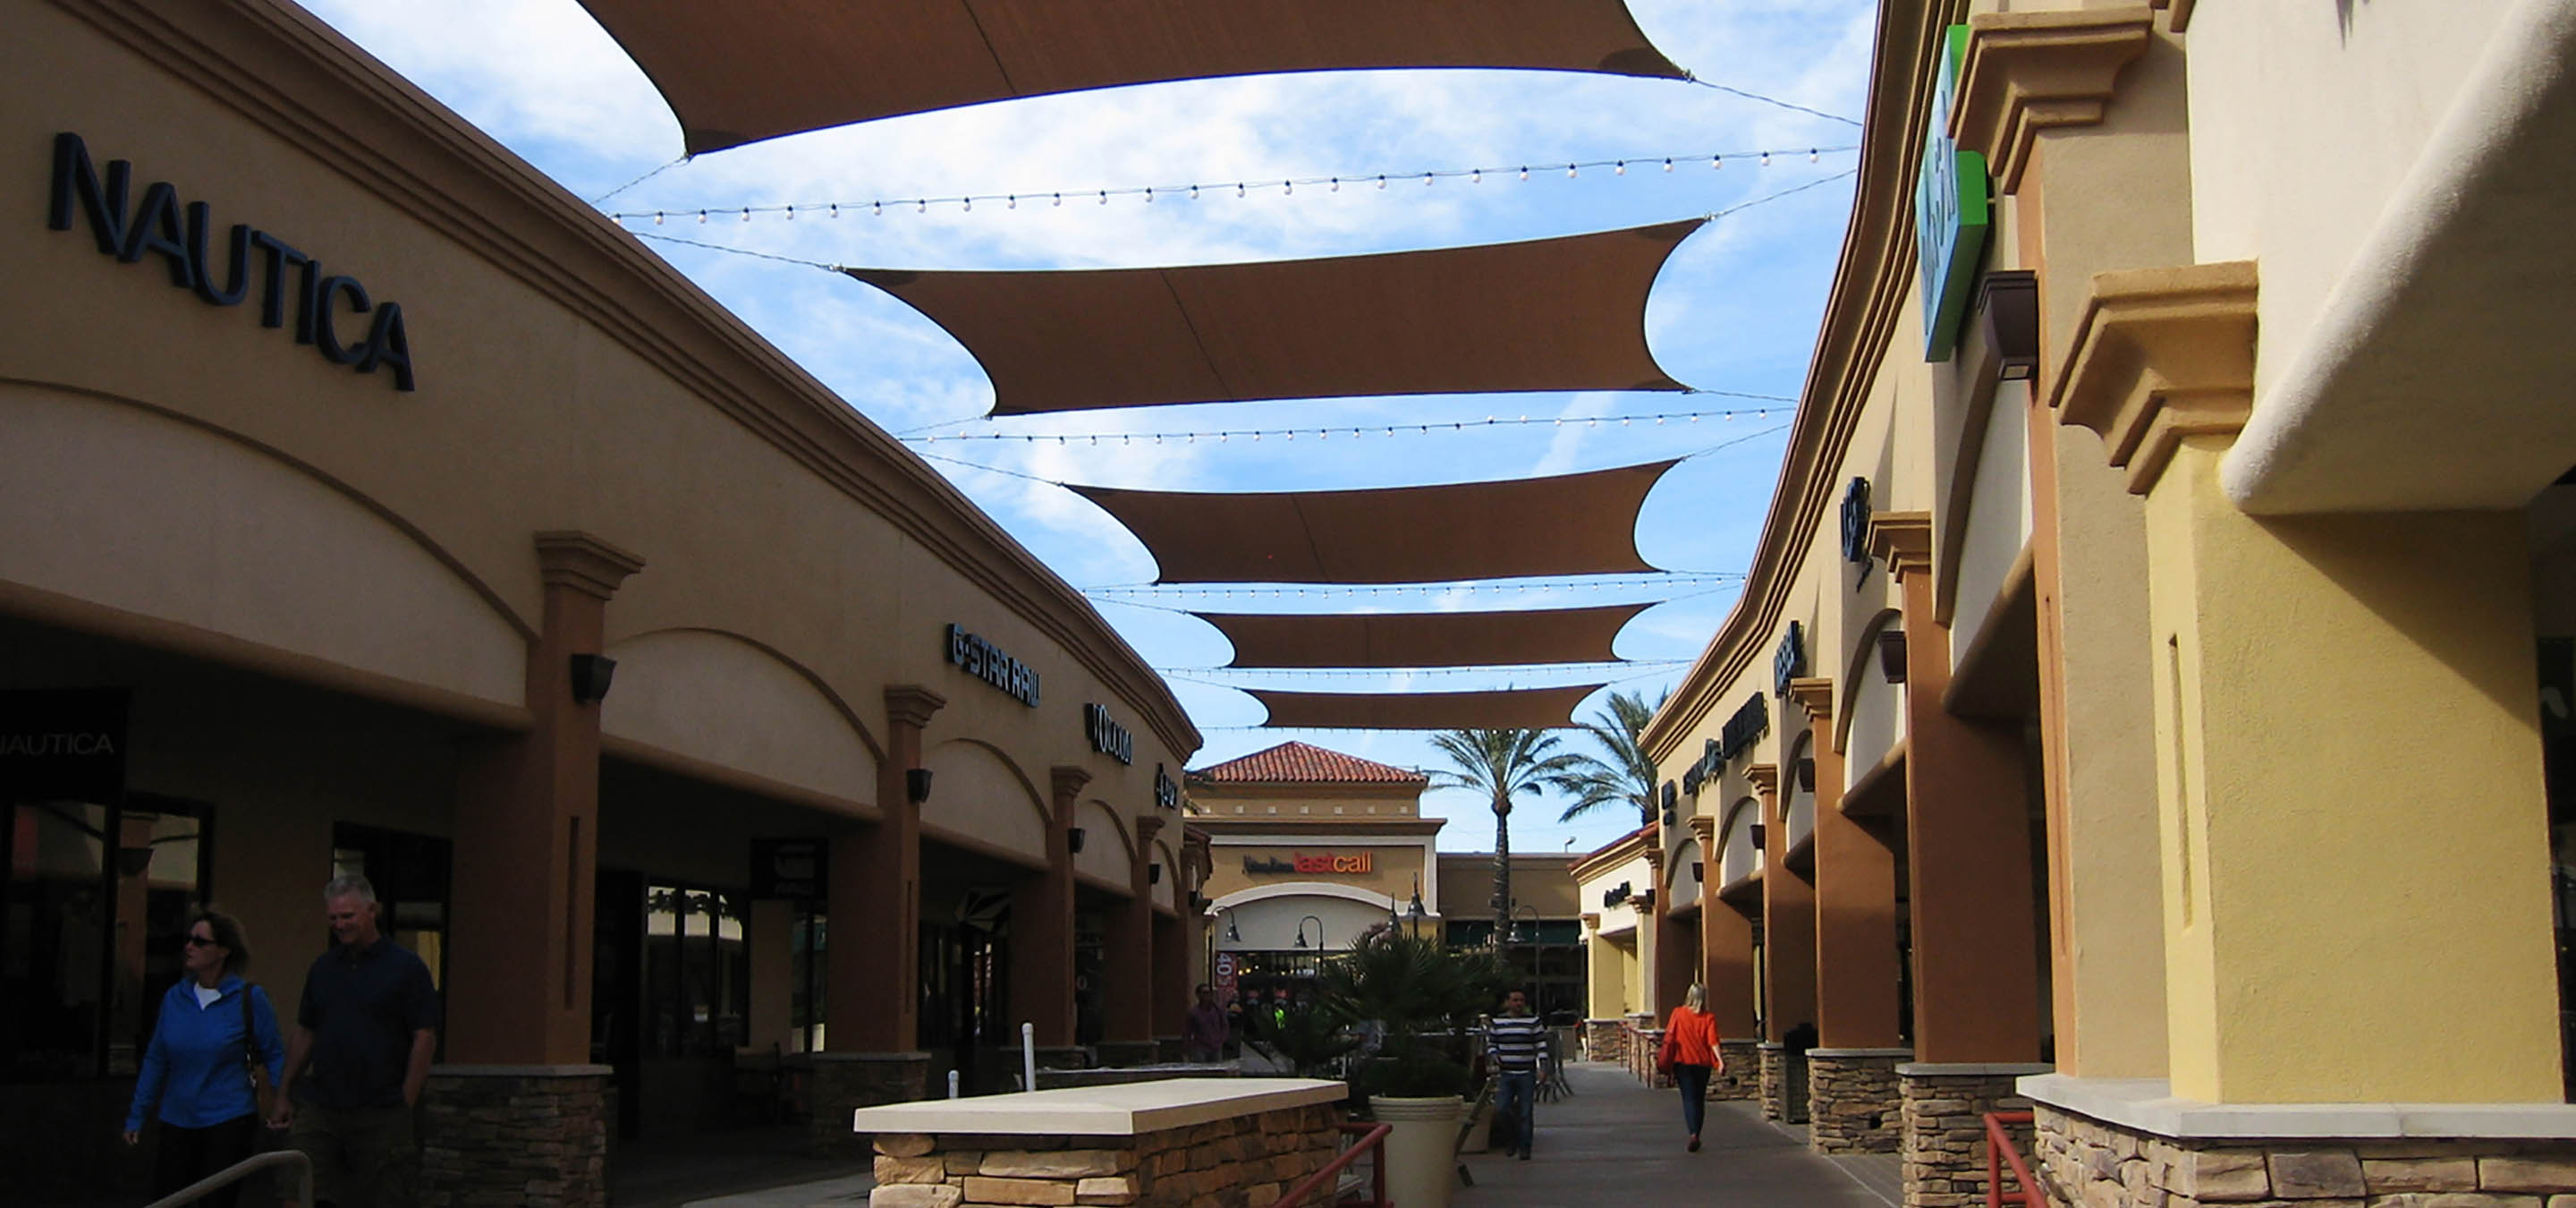 Desert Hills Premium Outlets - Architects Orange